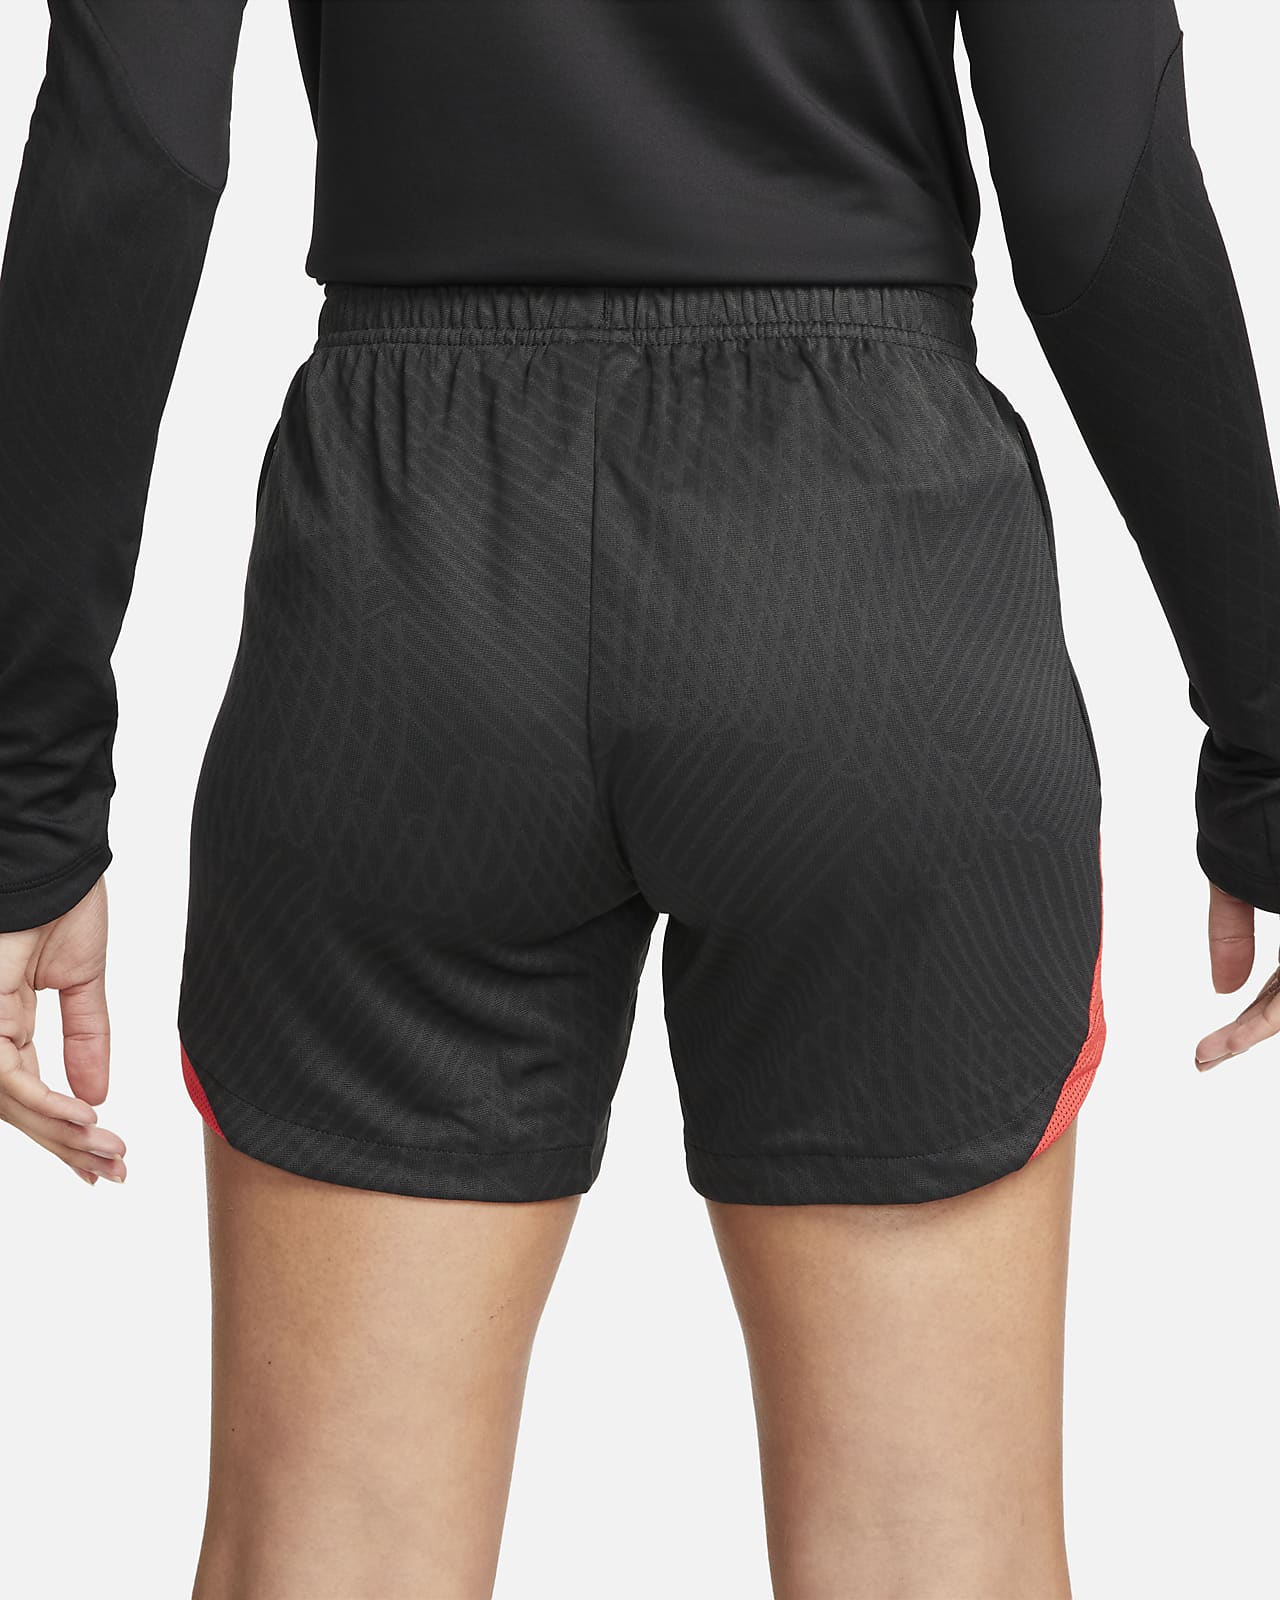 Women's Athletic Shorts for Soccer